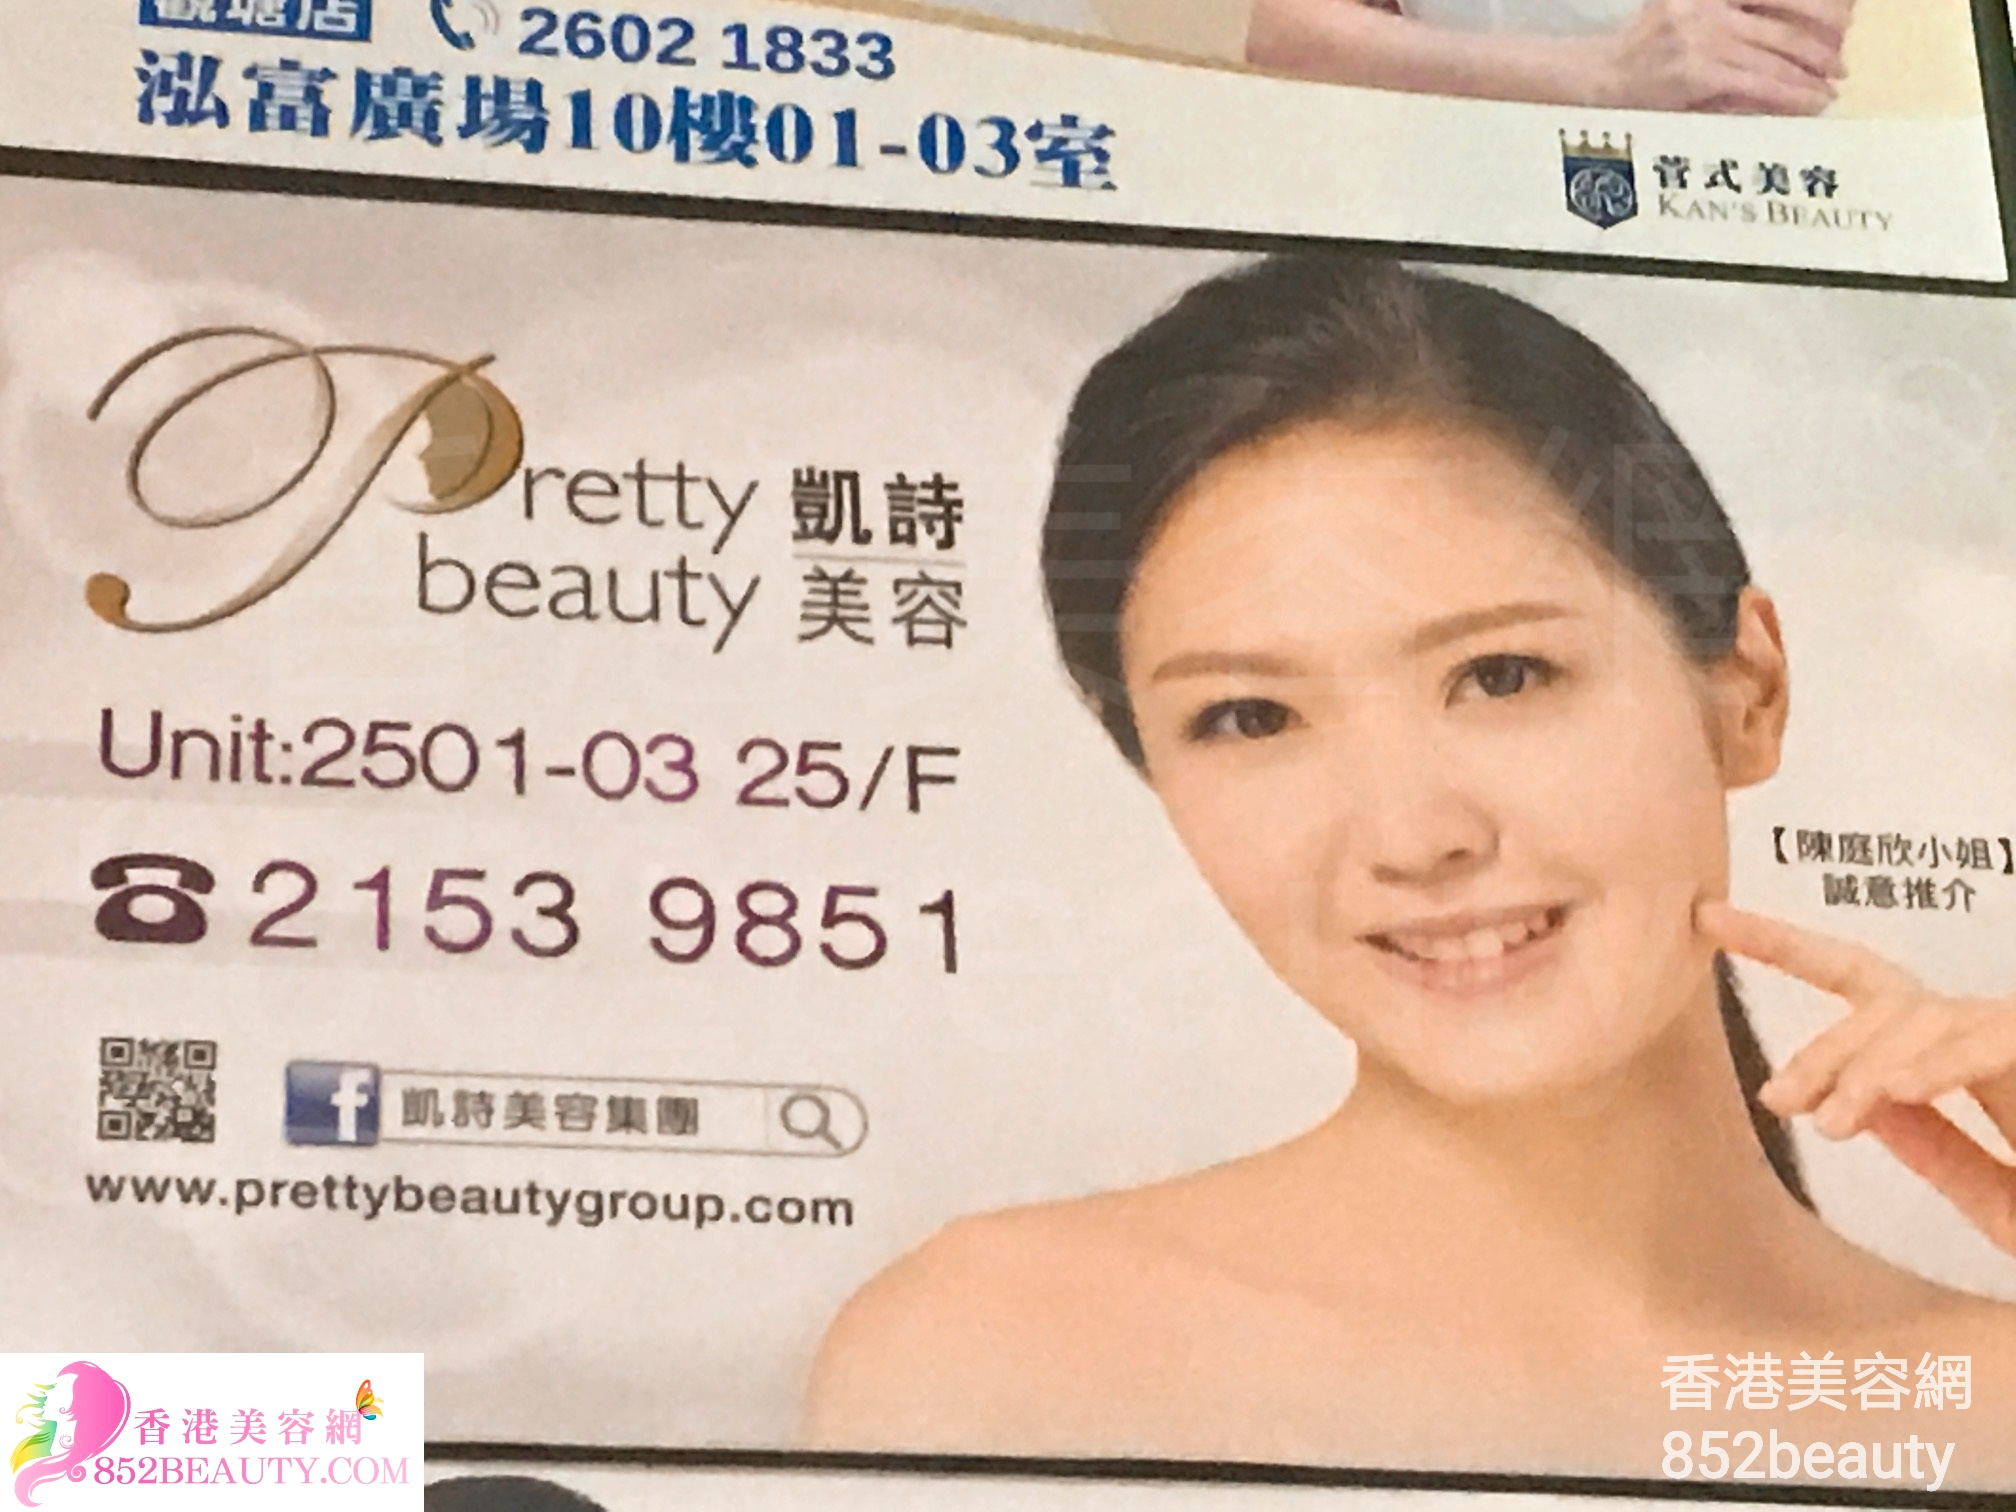 Medical Aesthetics: Pretty beauty 凱詩美容 (觀塘店)